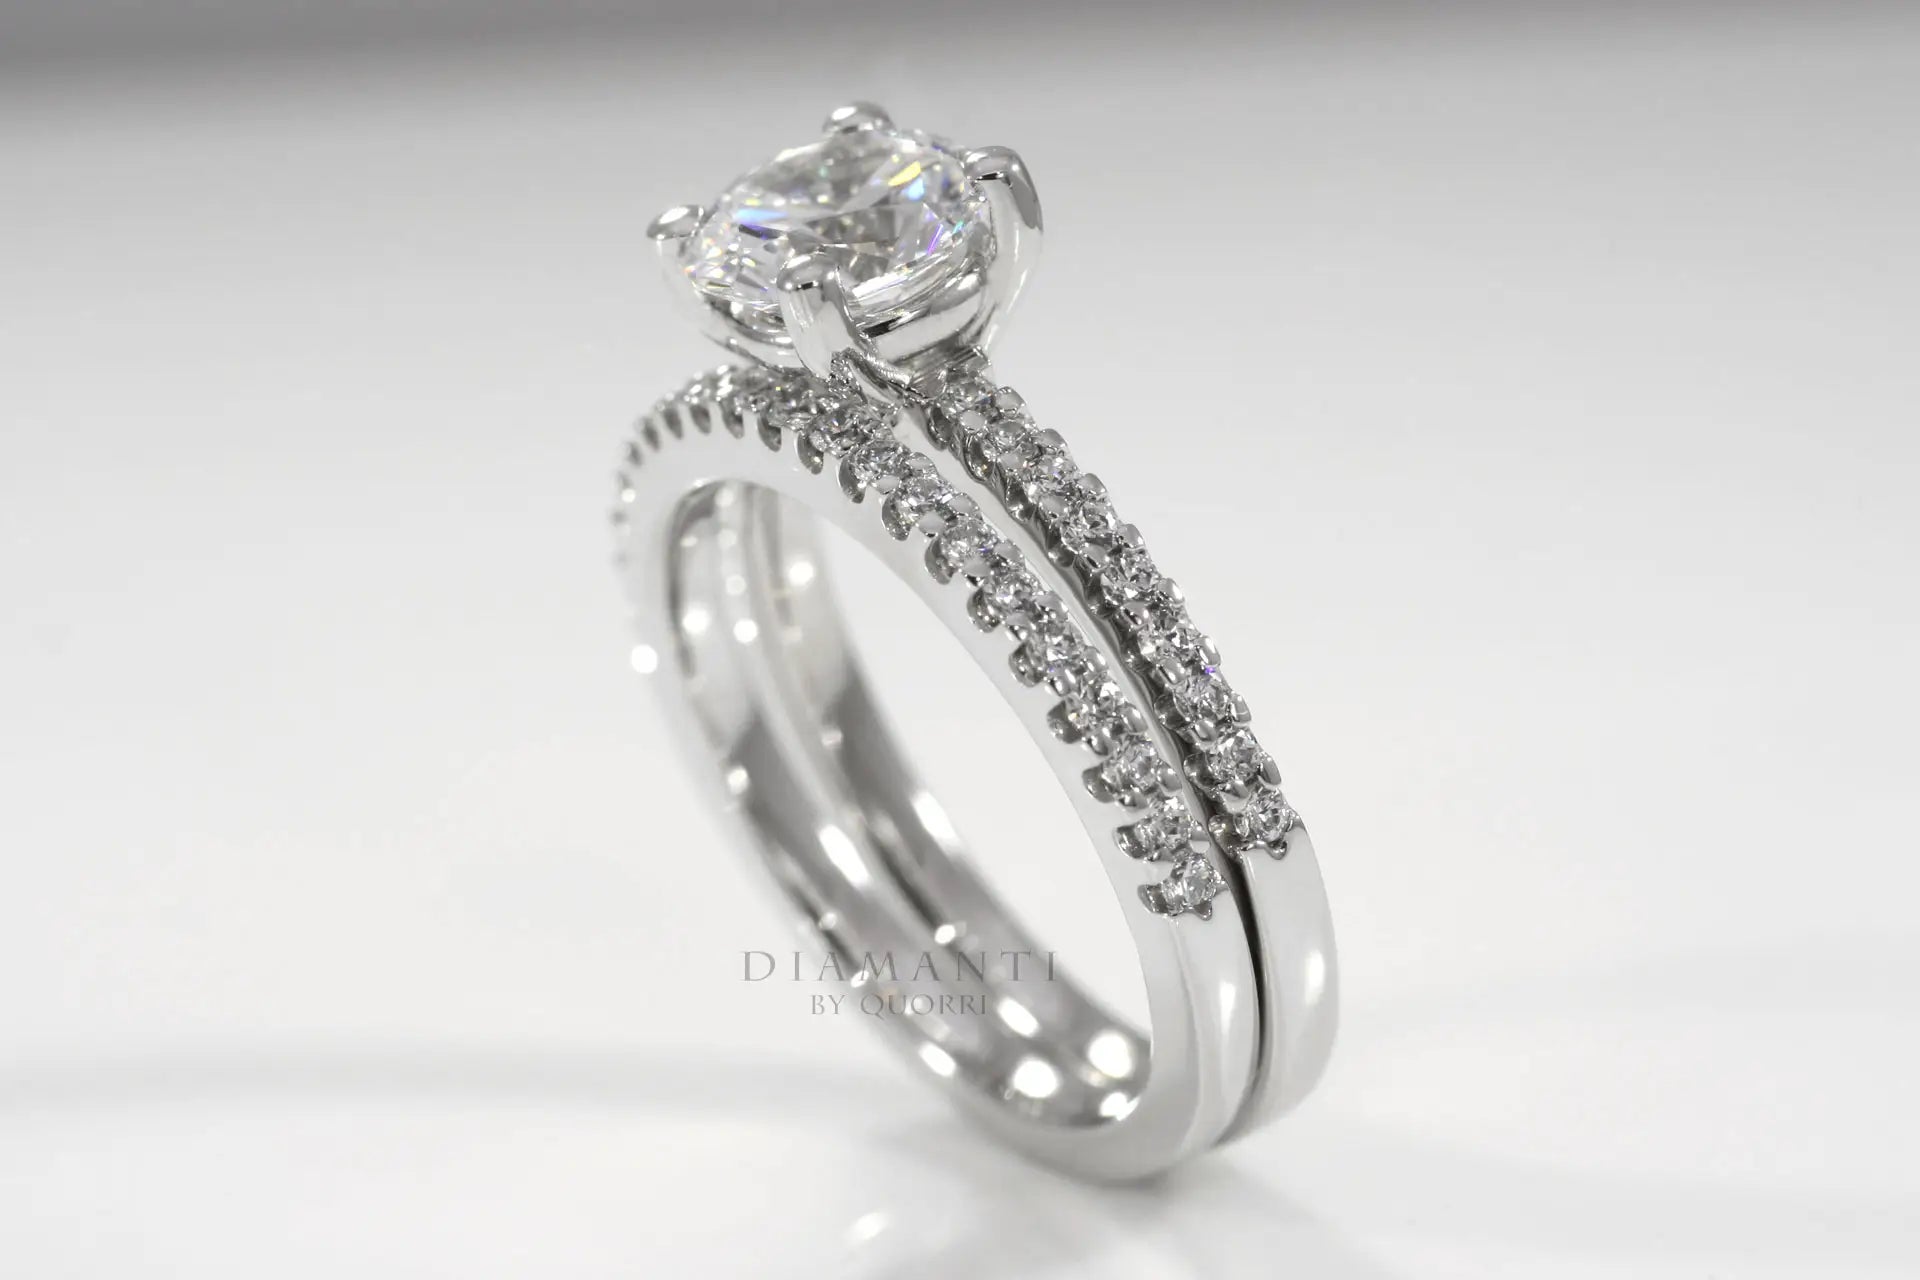 designer scalloped round accented lab diamond wedding ring and band Quorri